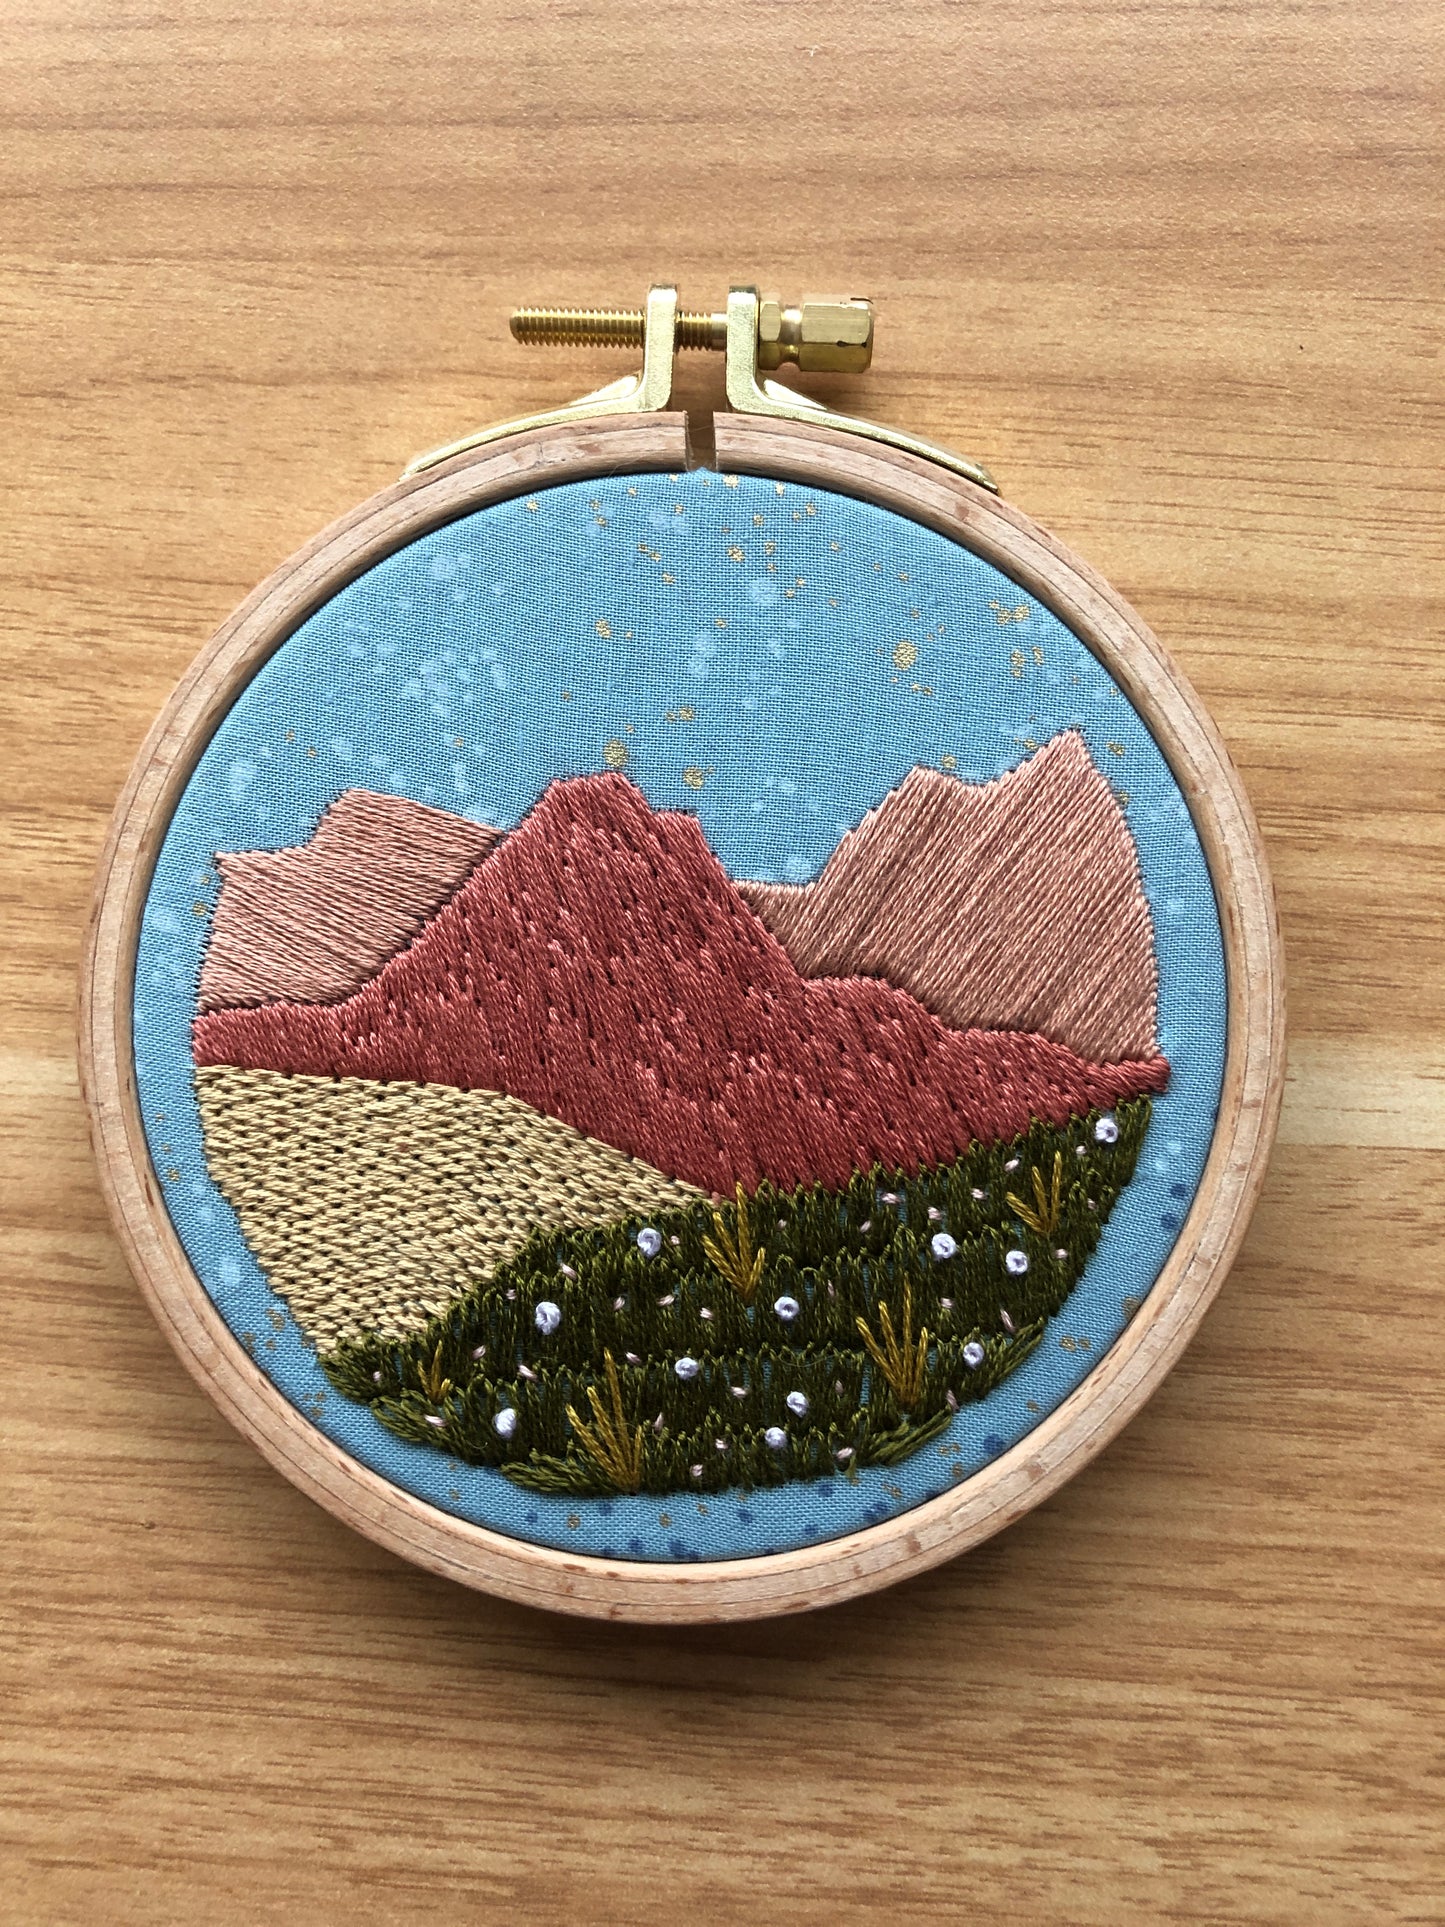 Desert Meadow - Beginner Hand Embroidery Pattern PDF